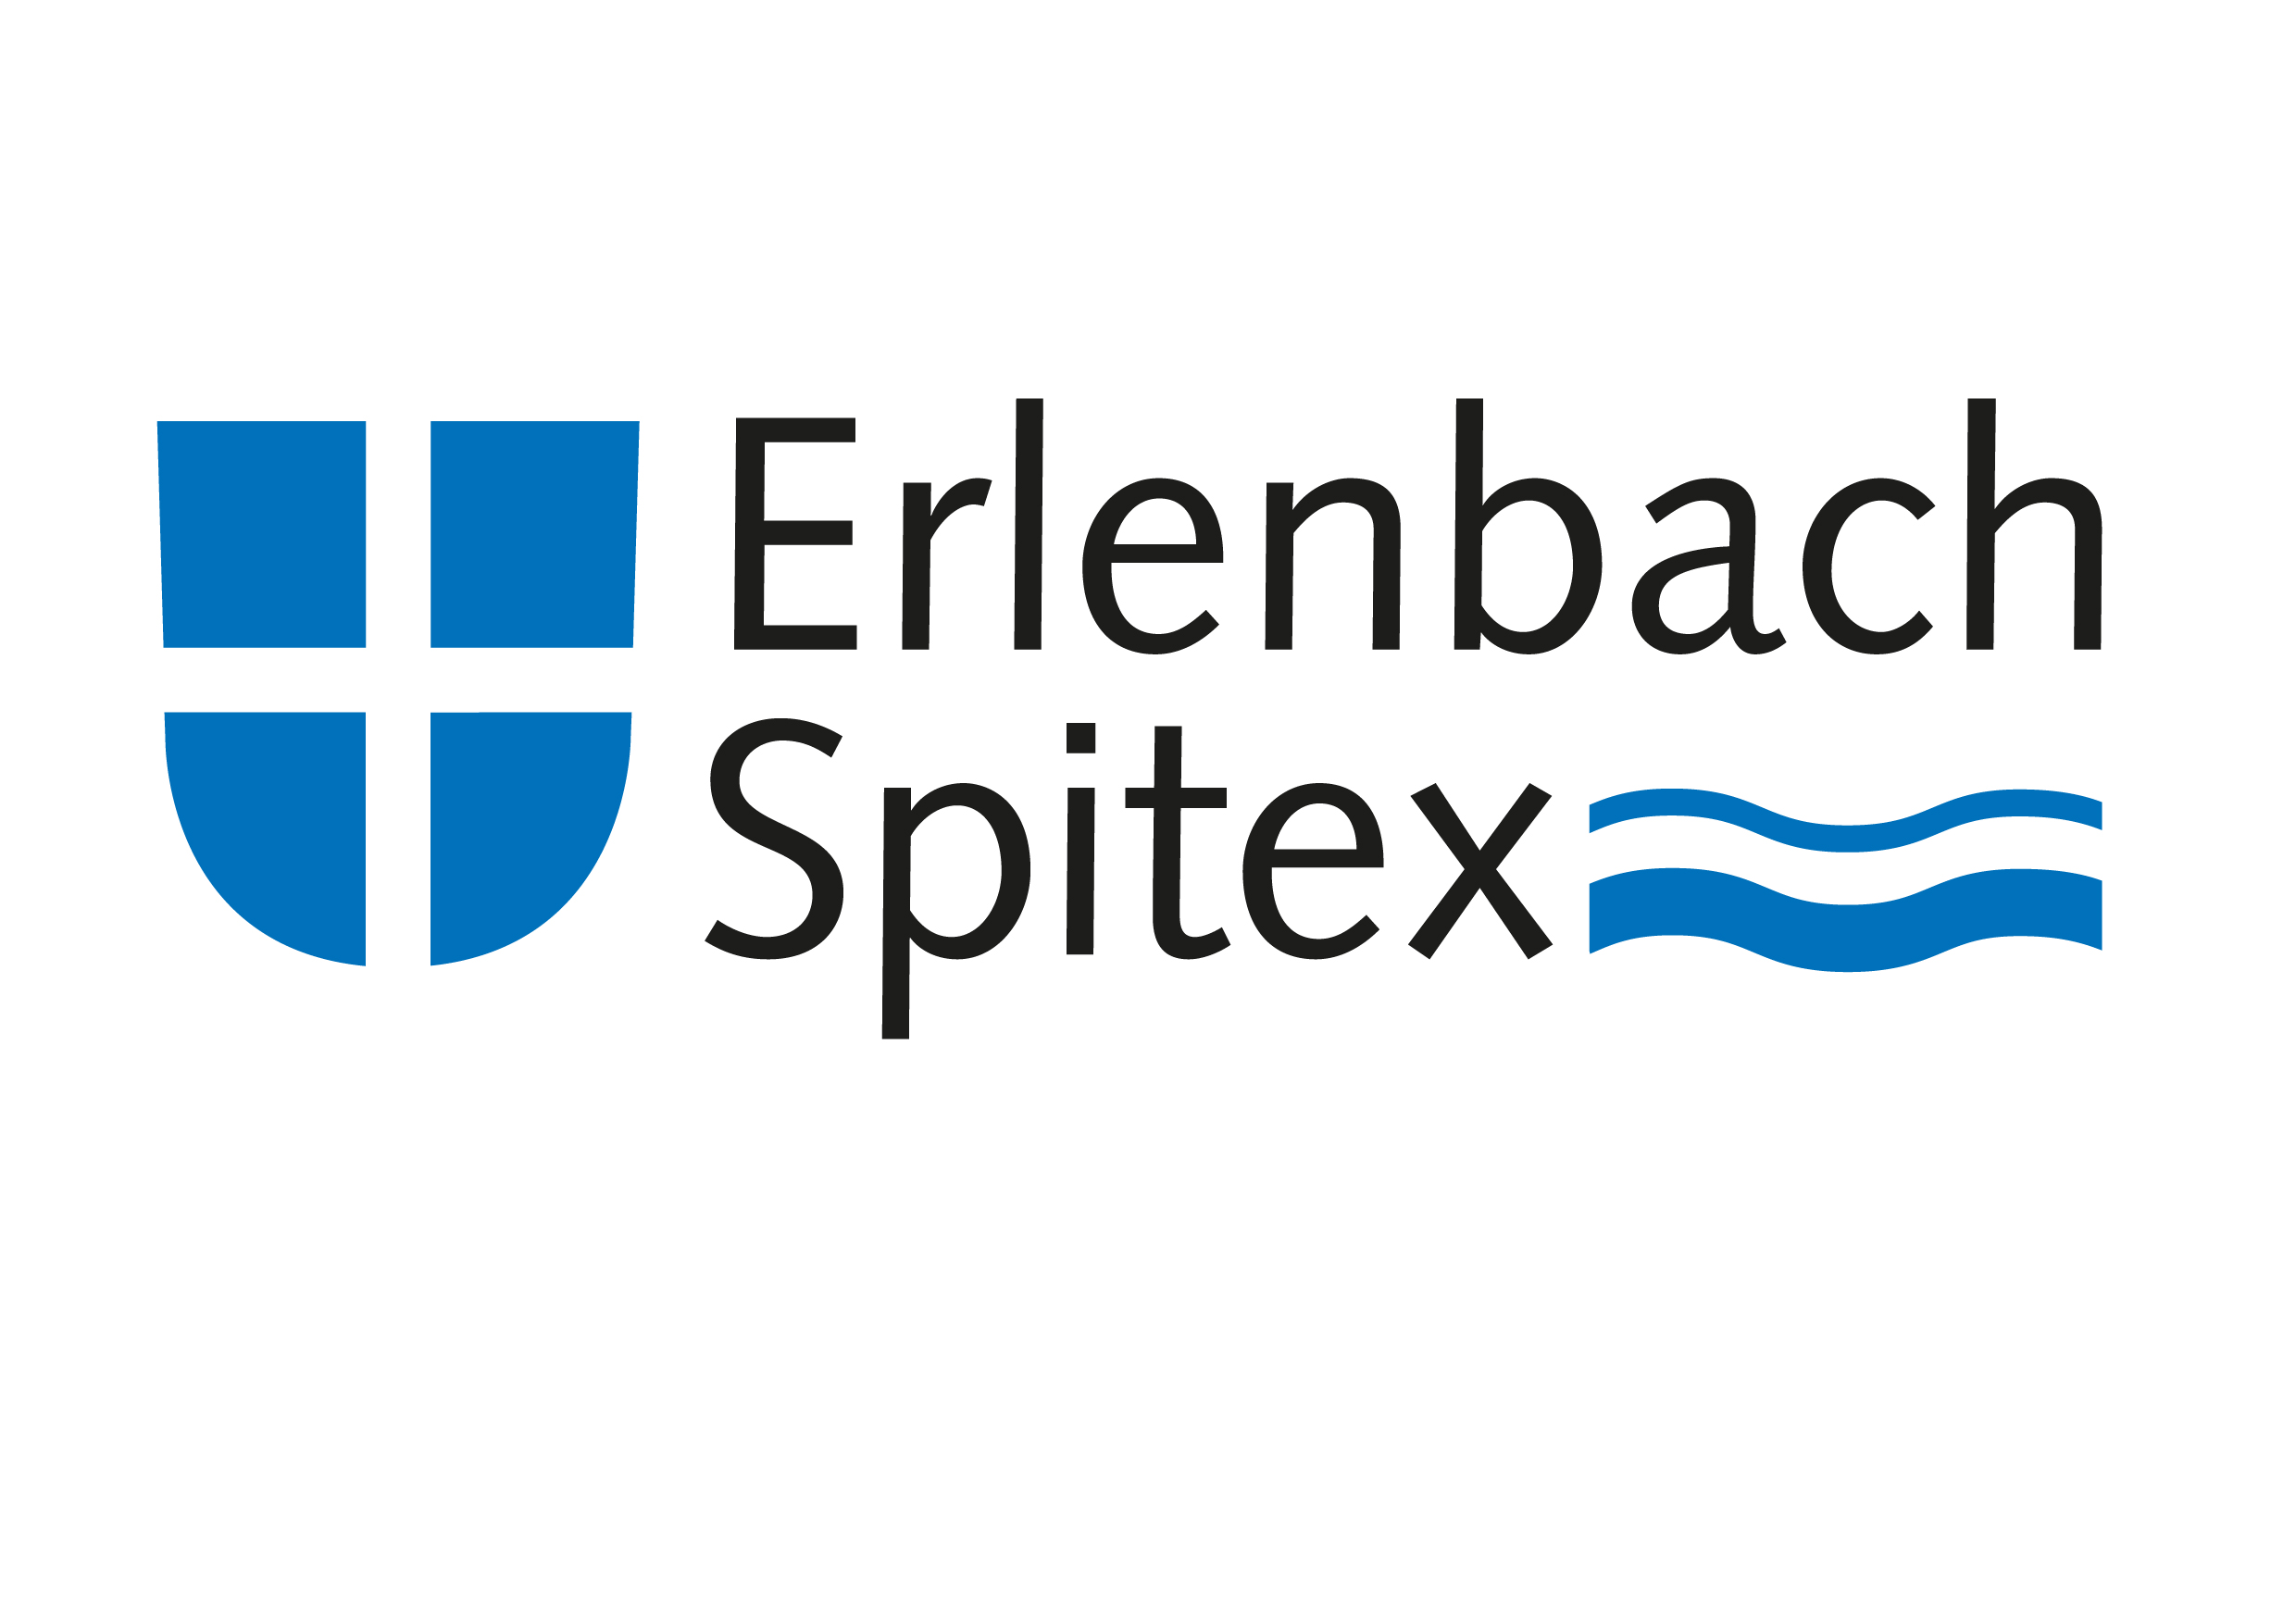 Spitex Erlenbach Senevita